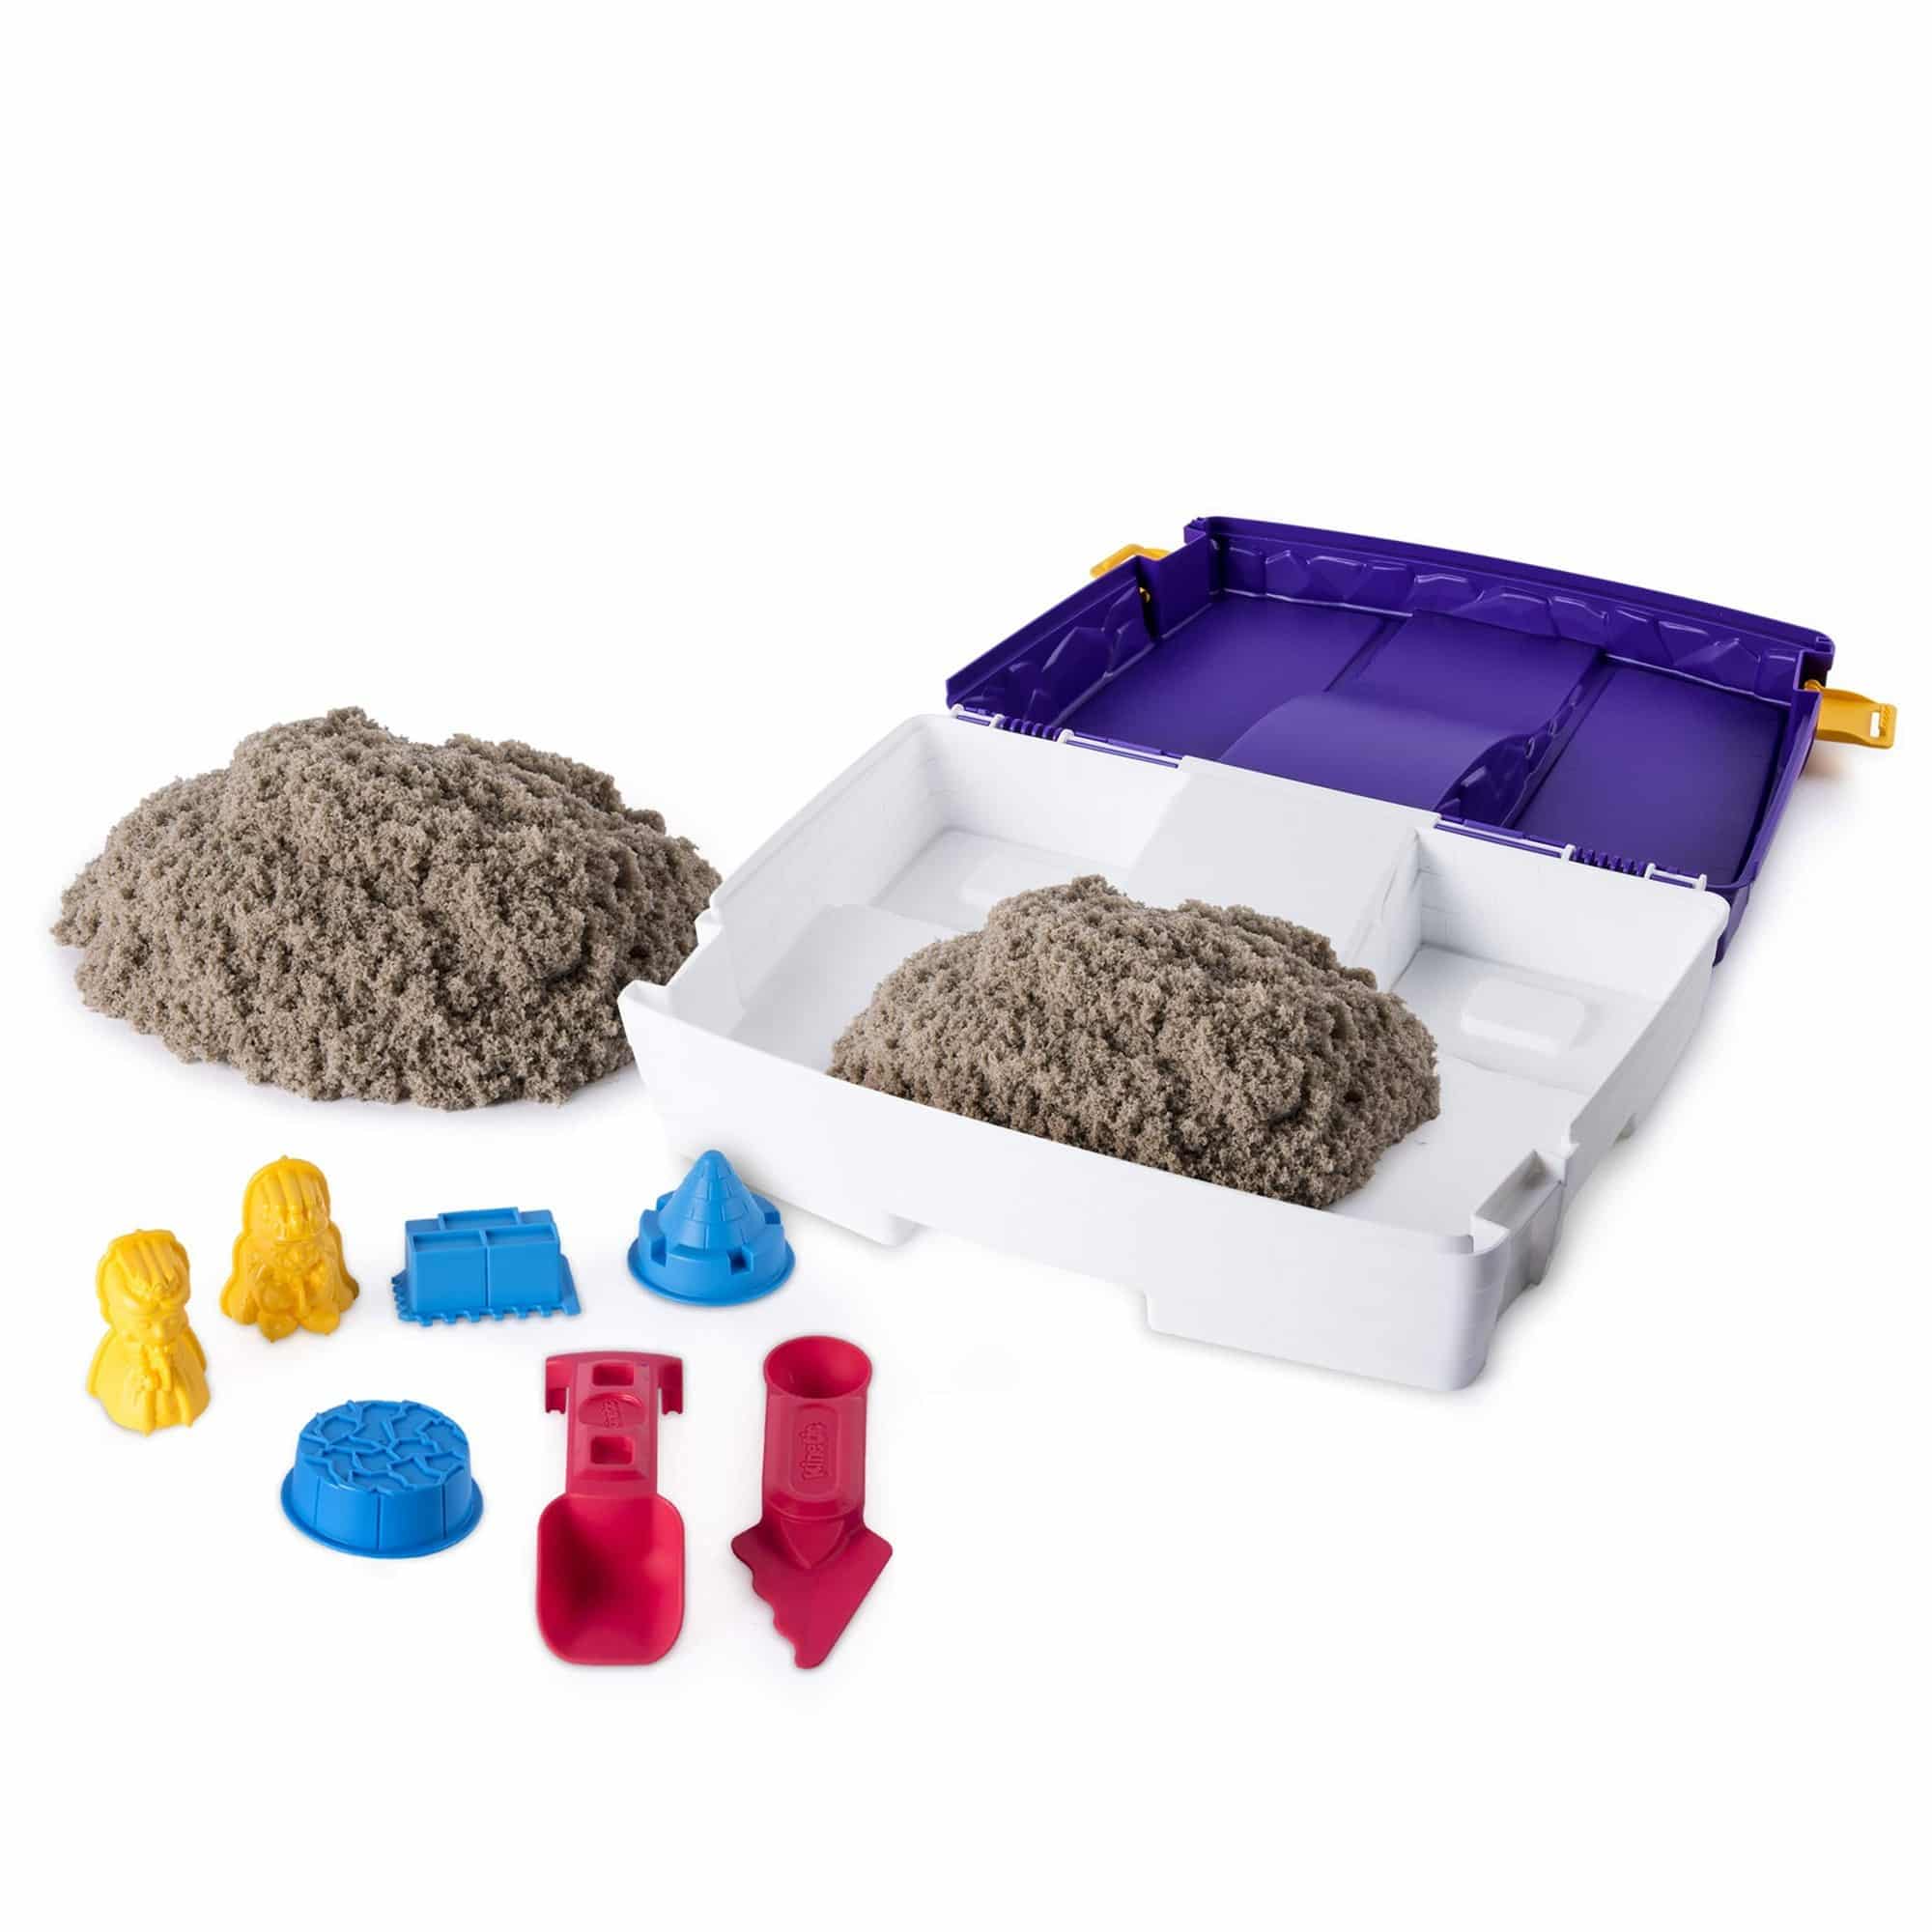 Kinetic Sand - Folding Sand Box